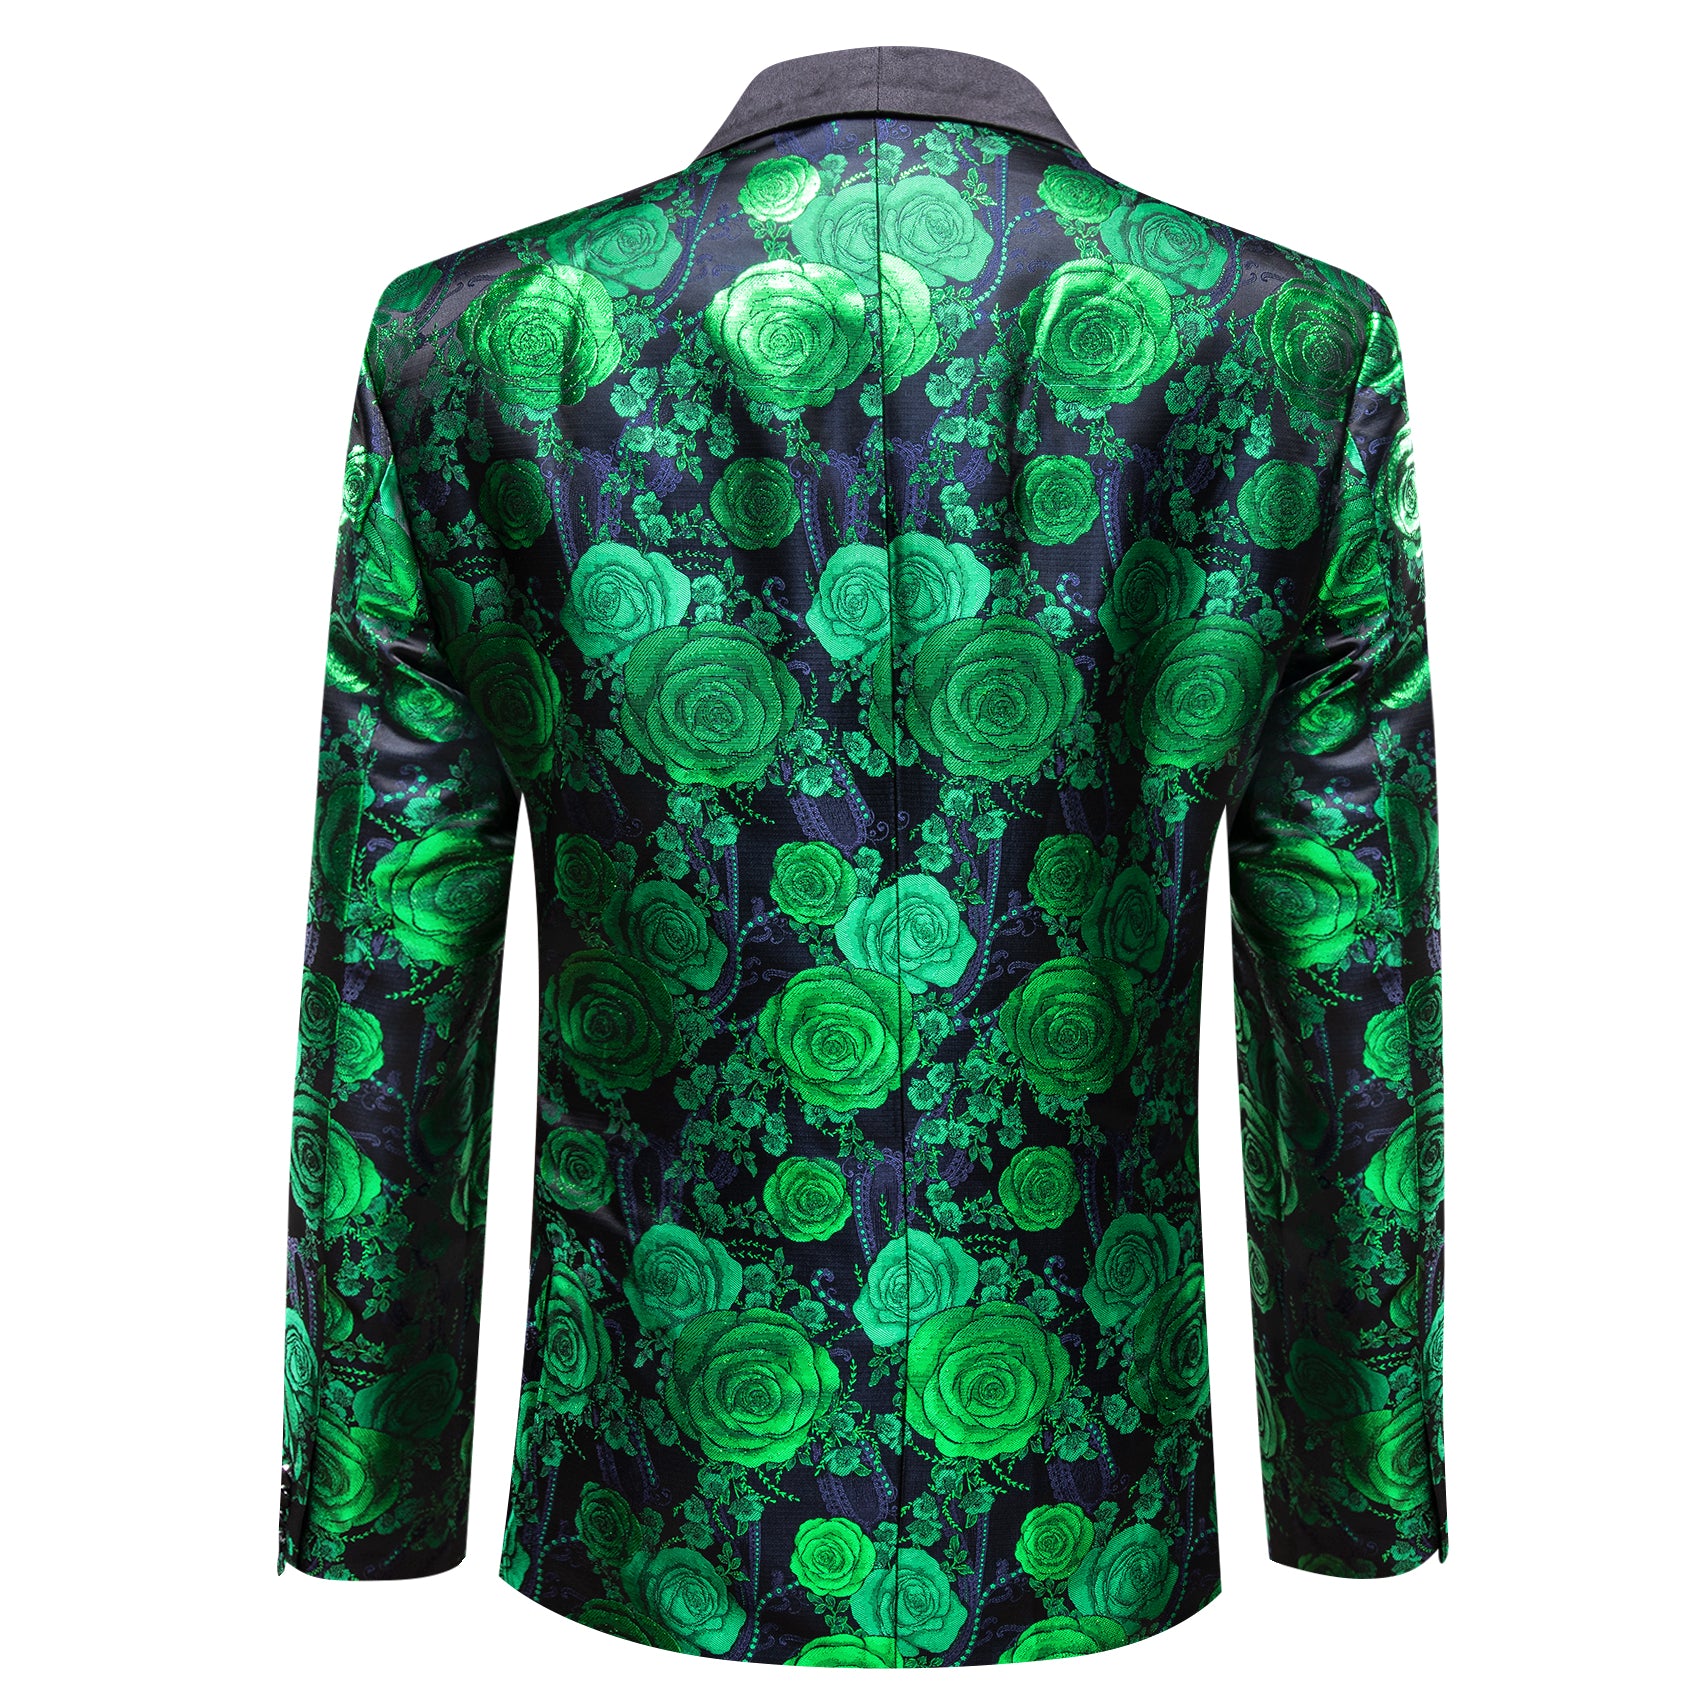 Barry.wang Men's Suit Green Blue Flower Shawl Collar Suit Jacket